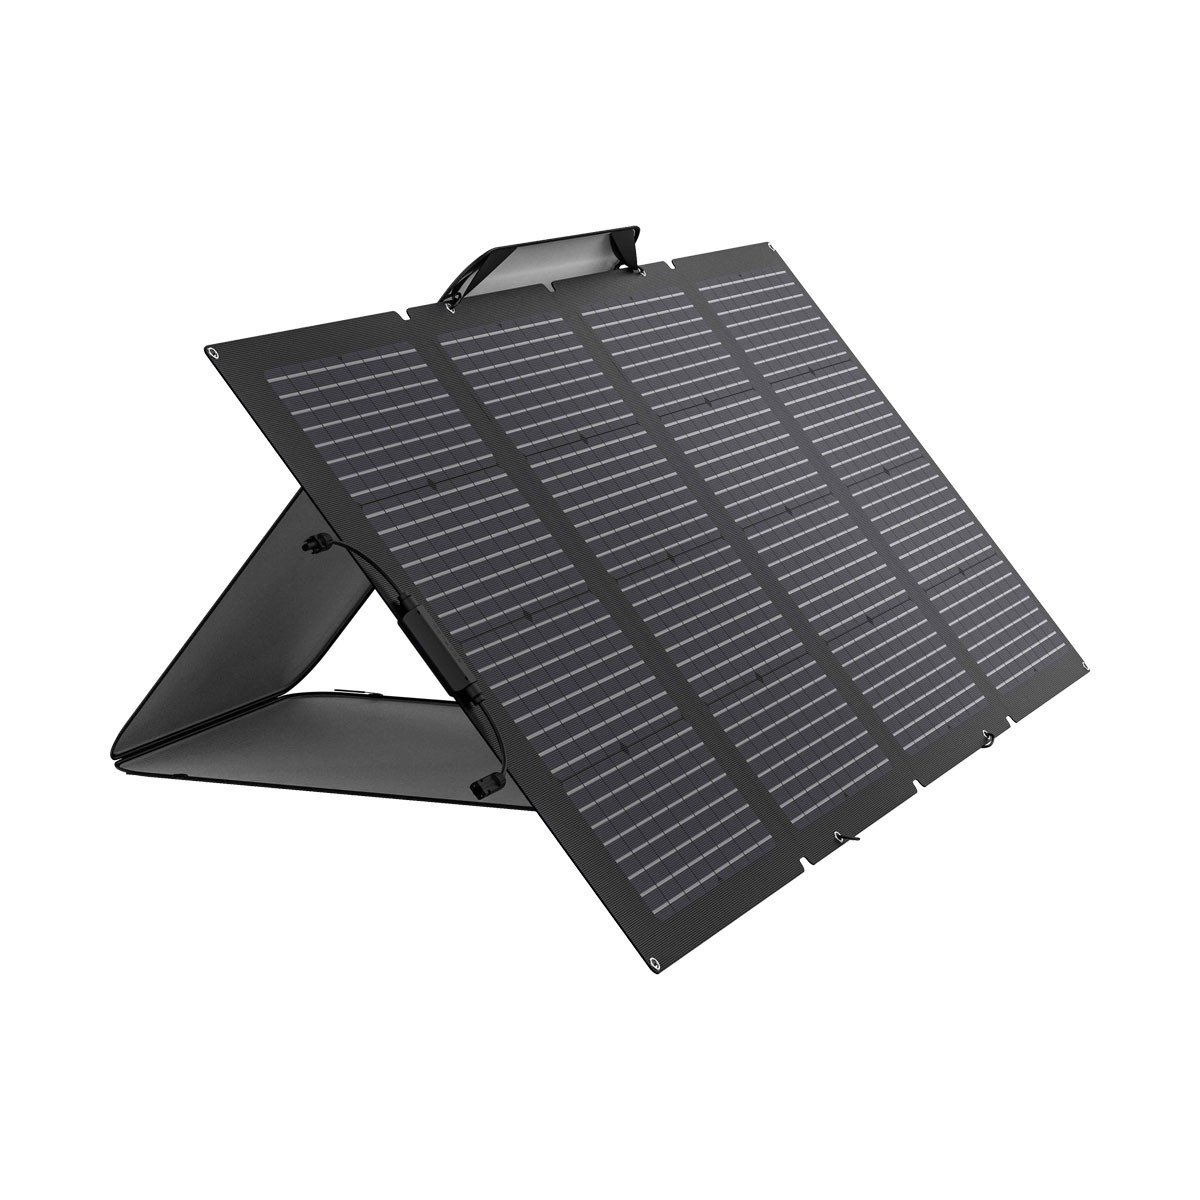 EcoFlow River 2 Max 512Wh Portable Powerstation mit 220W Solarmodul